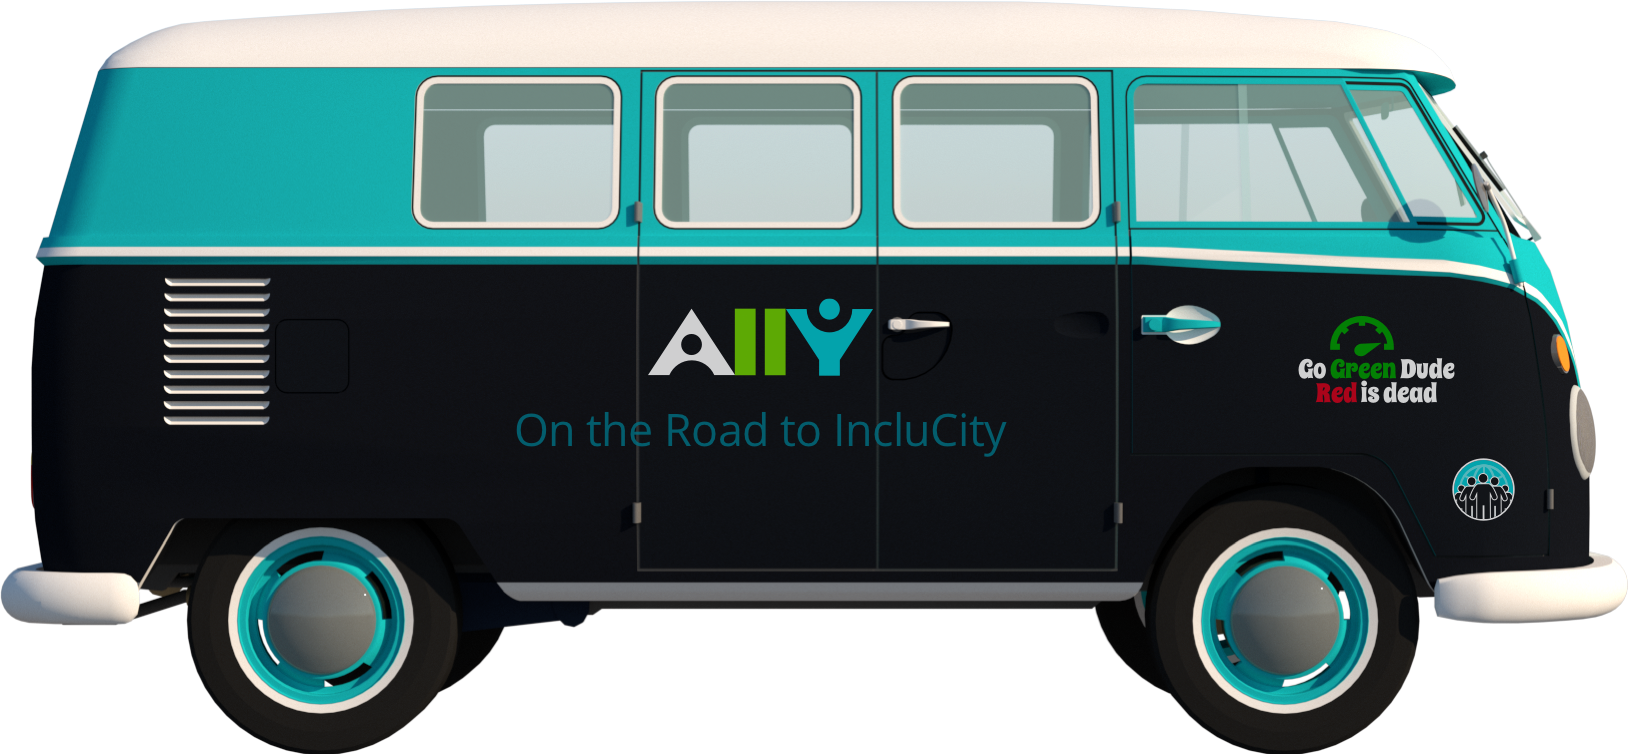 Ally bus